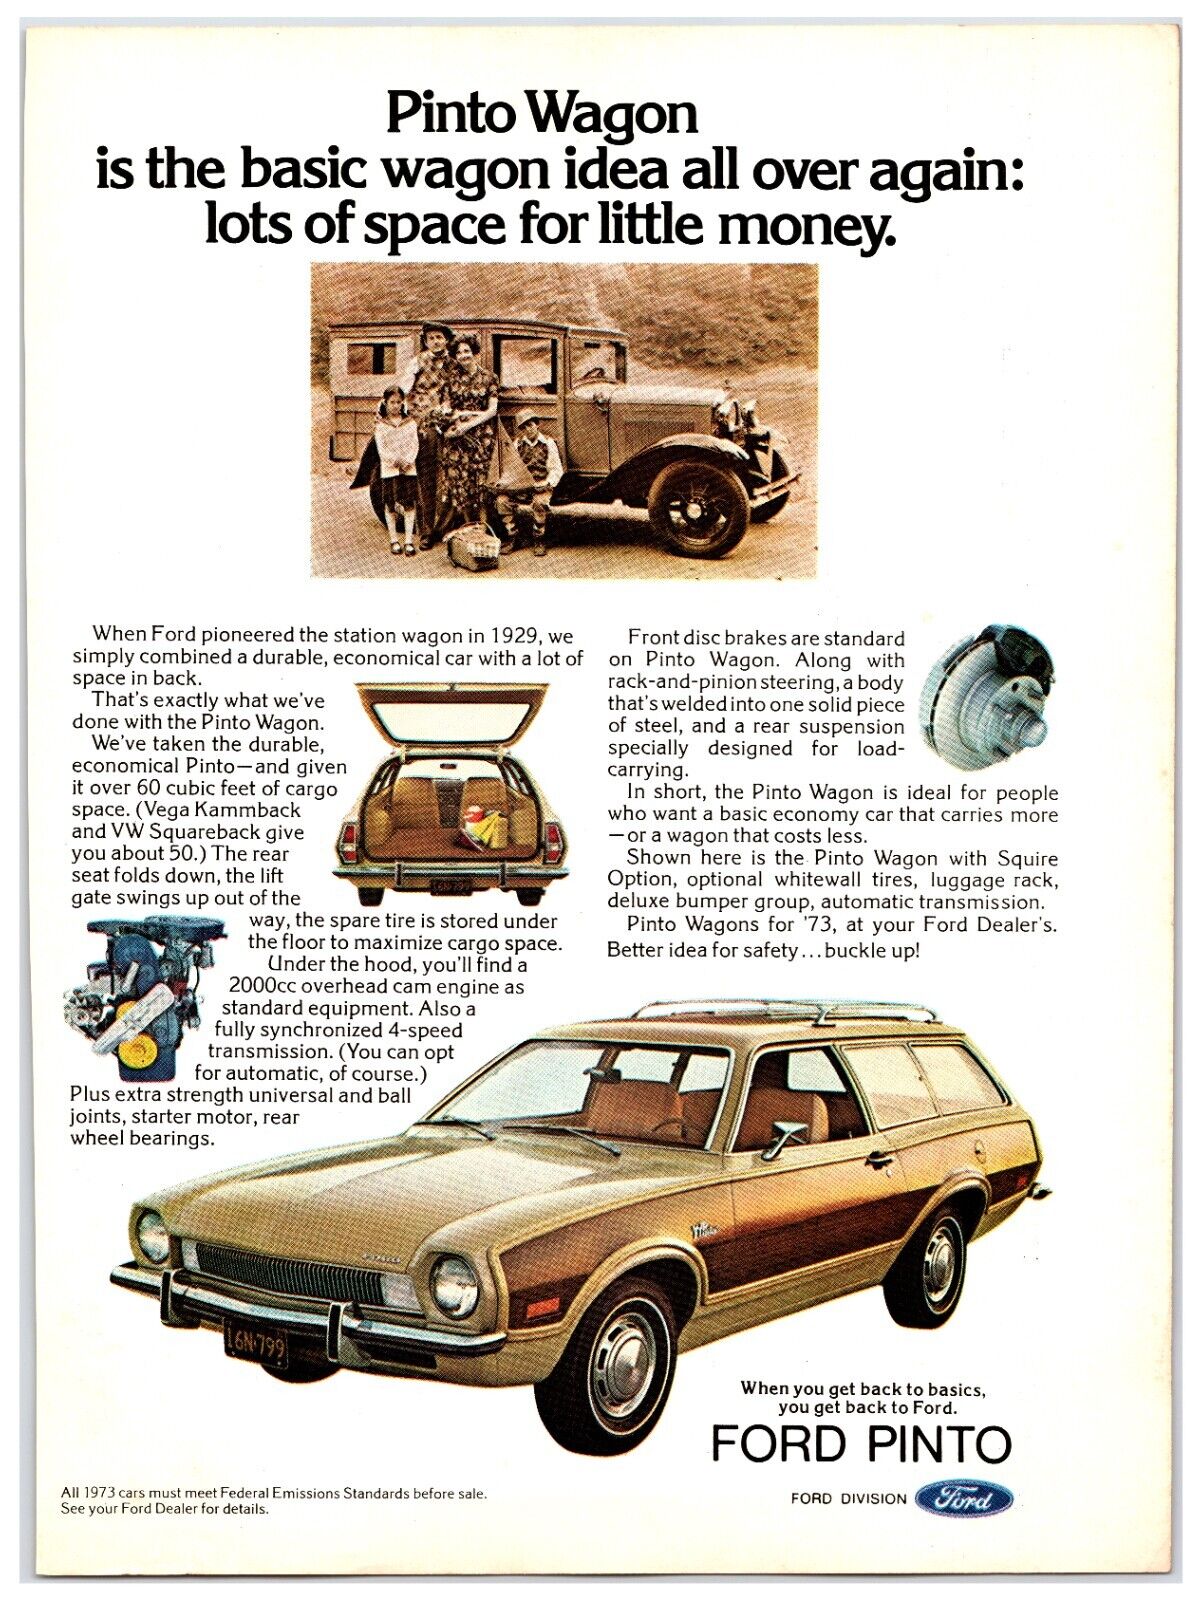 Original 1973 Ford Pinto Wagon Car- Original Print Advertisement (8x11)